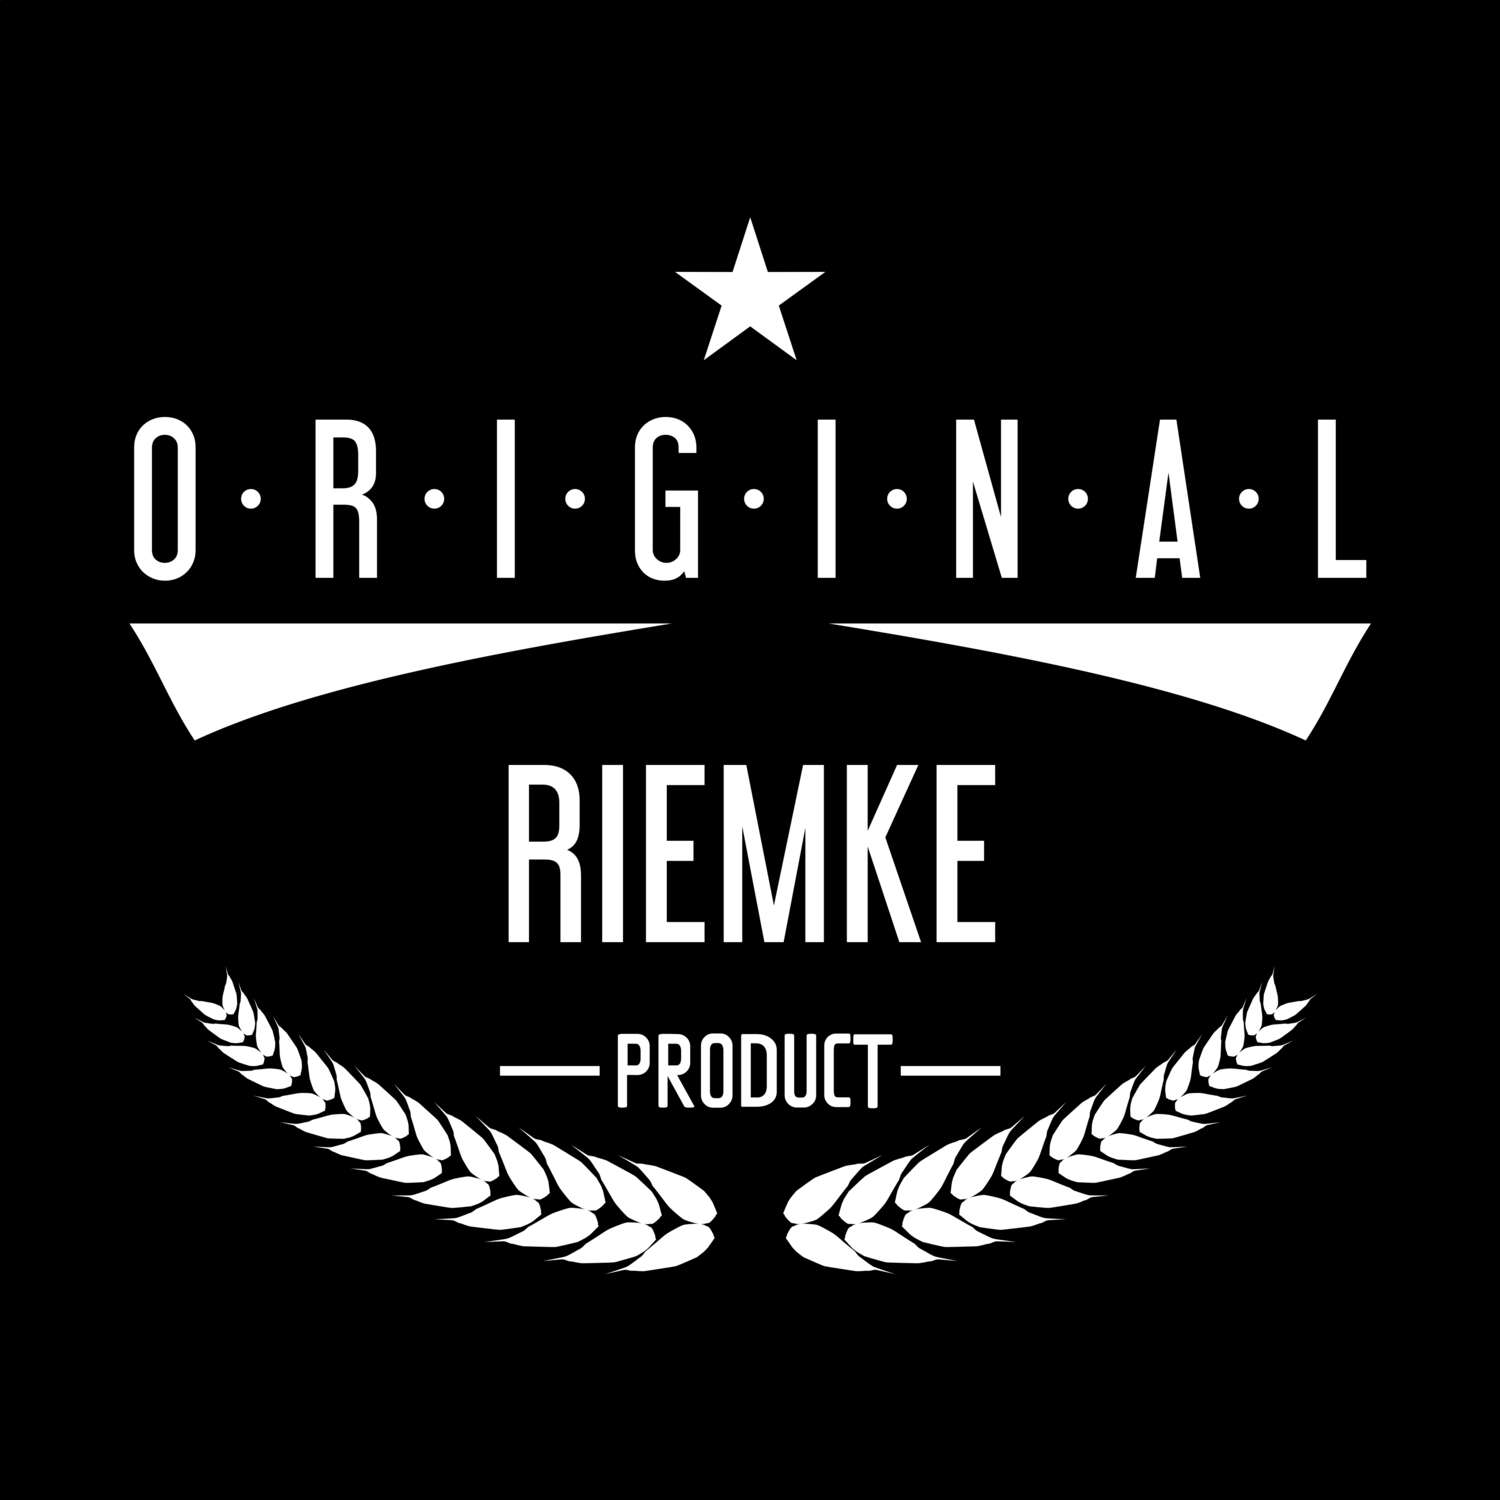 Riemke T-Shirt »Original Product«